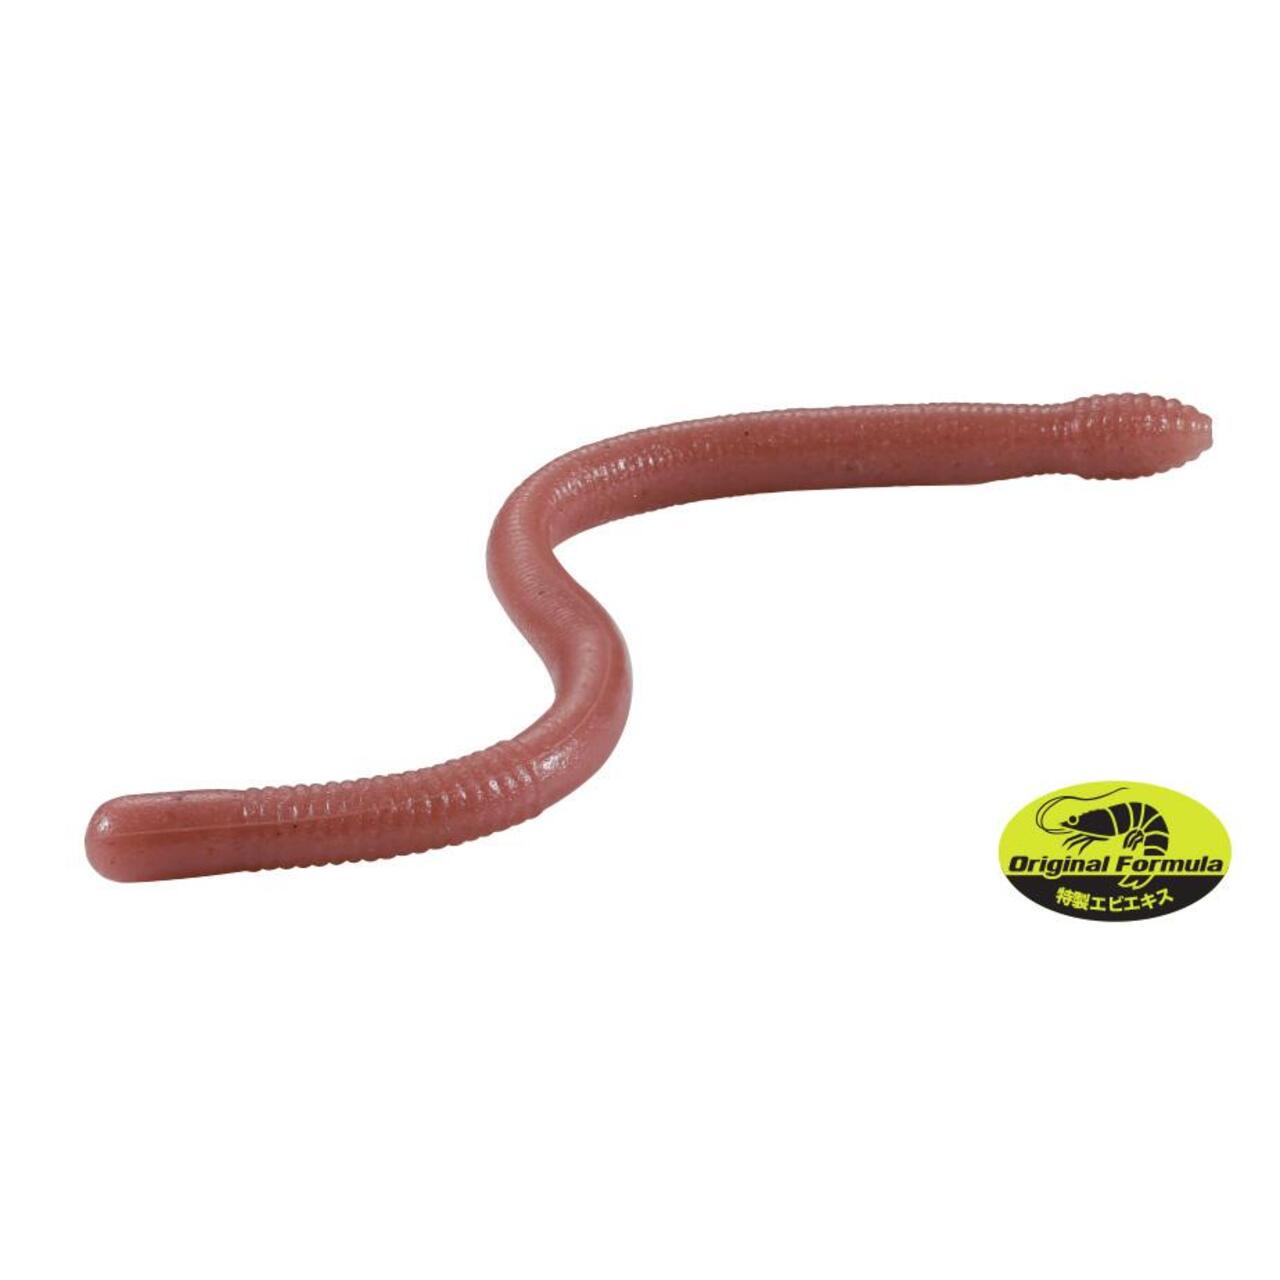 Earthworm Super-Strong PVC Yjrc-04 10.5cm2.0g Lifelike Creature